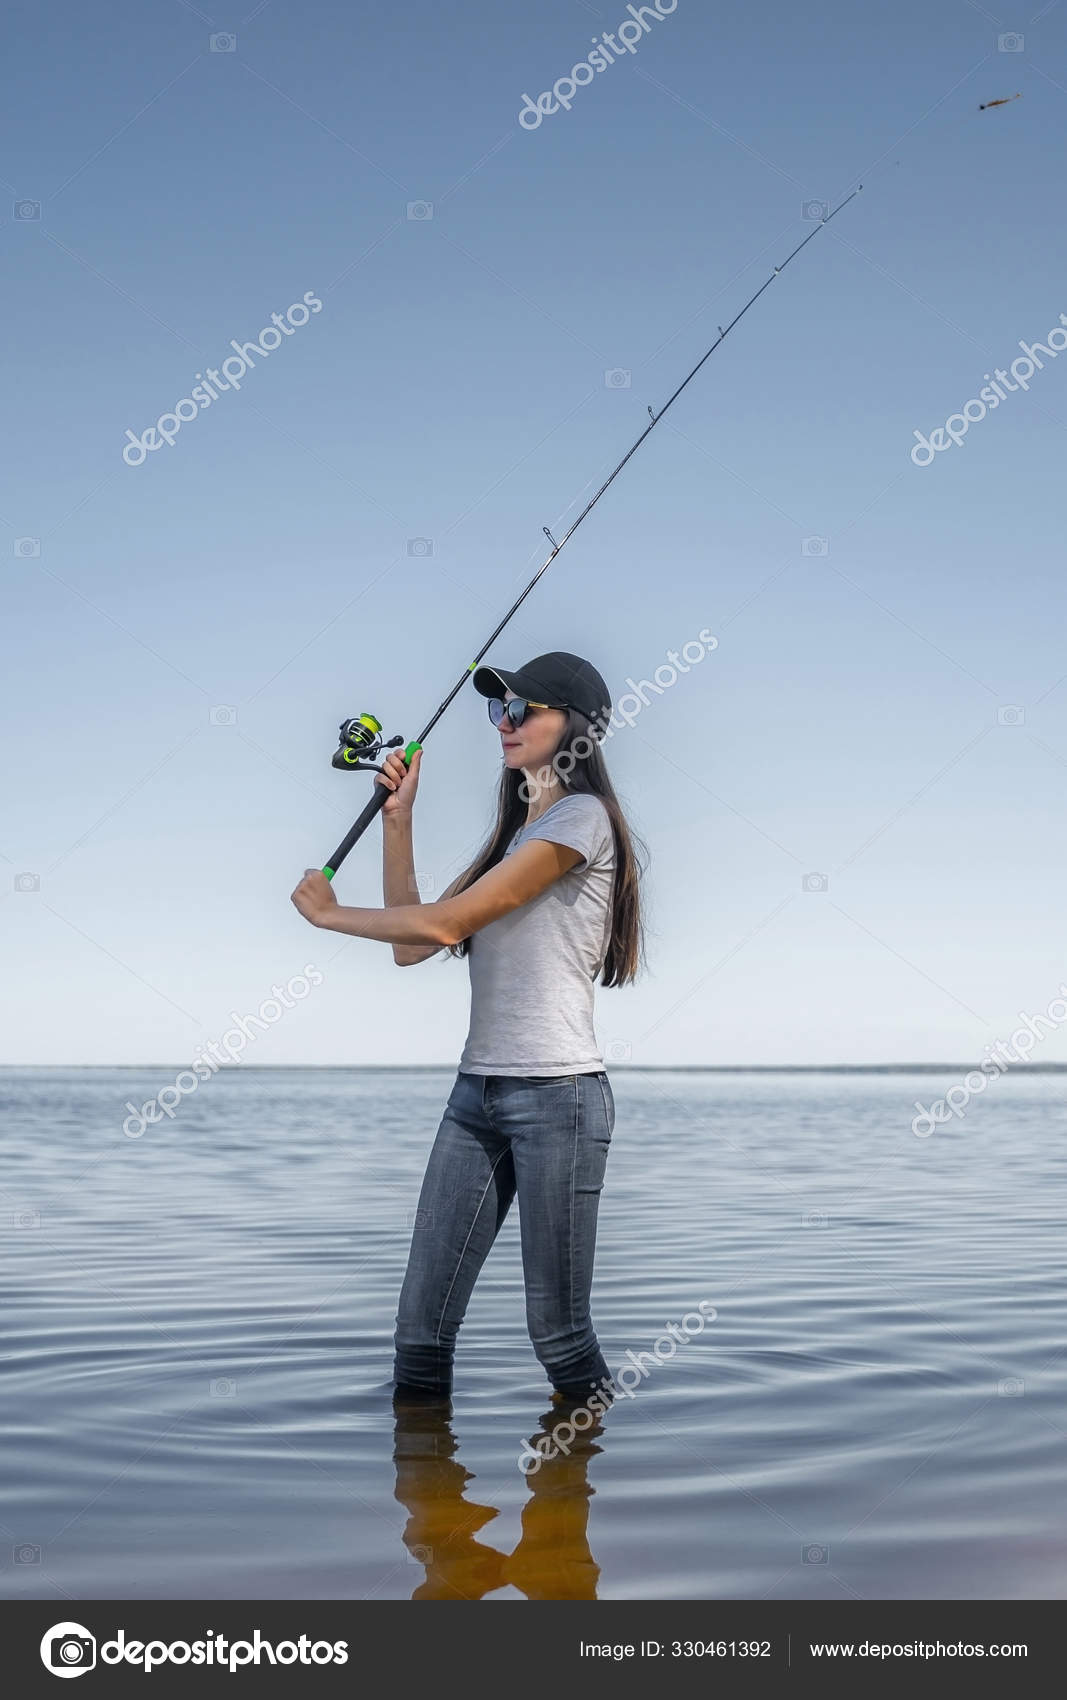 https://st3.depositphotos.com/17928540/33046/i/1600/depositphotos_330461392-stock-photo-fishing-concept-young-fisherwoman-with.jpg